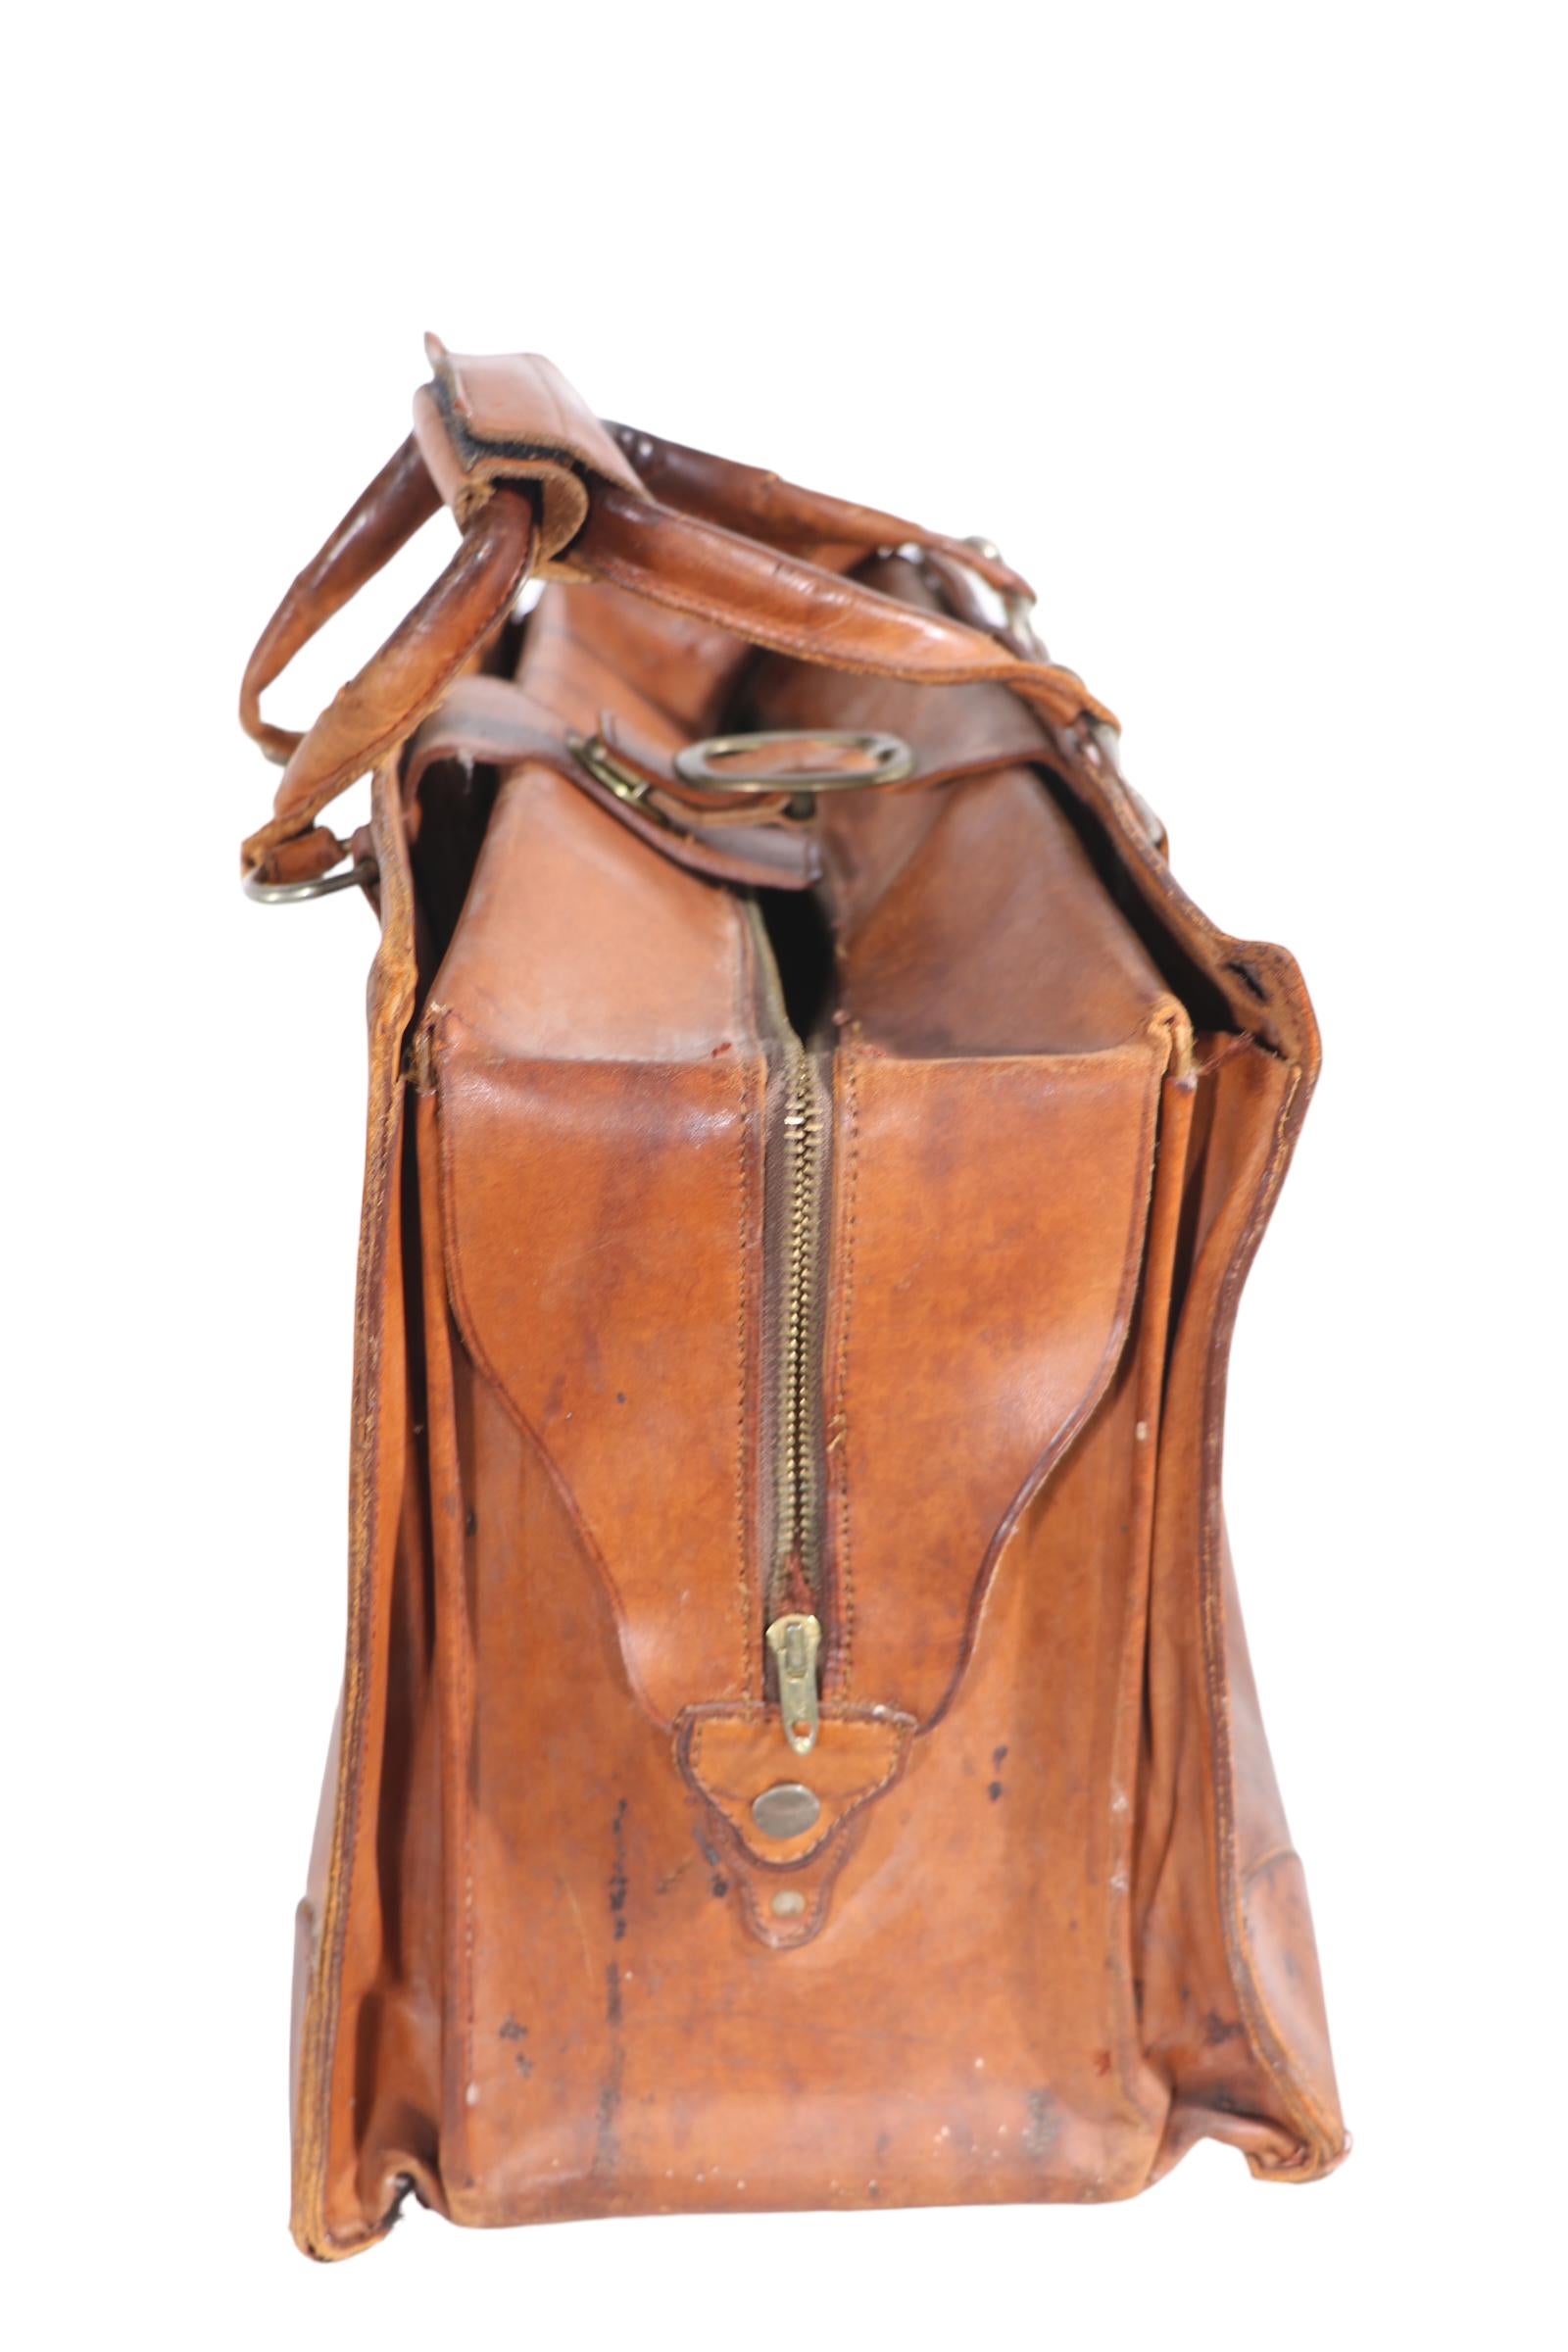 Metal Vintage Brown Leather Carry Bag Suitcase 